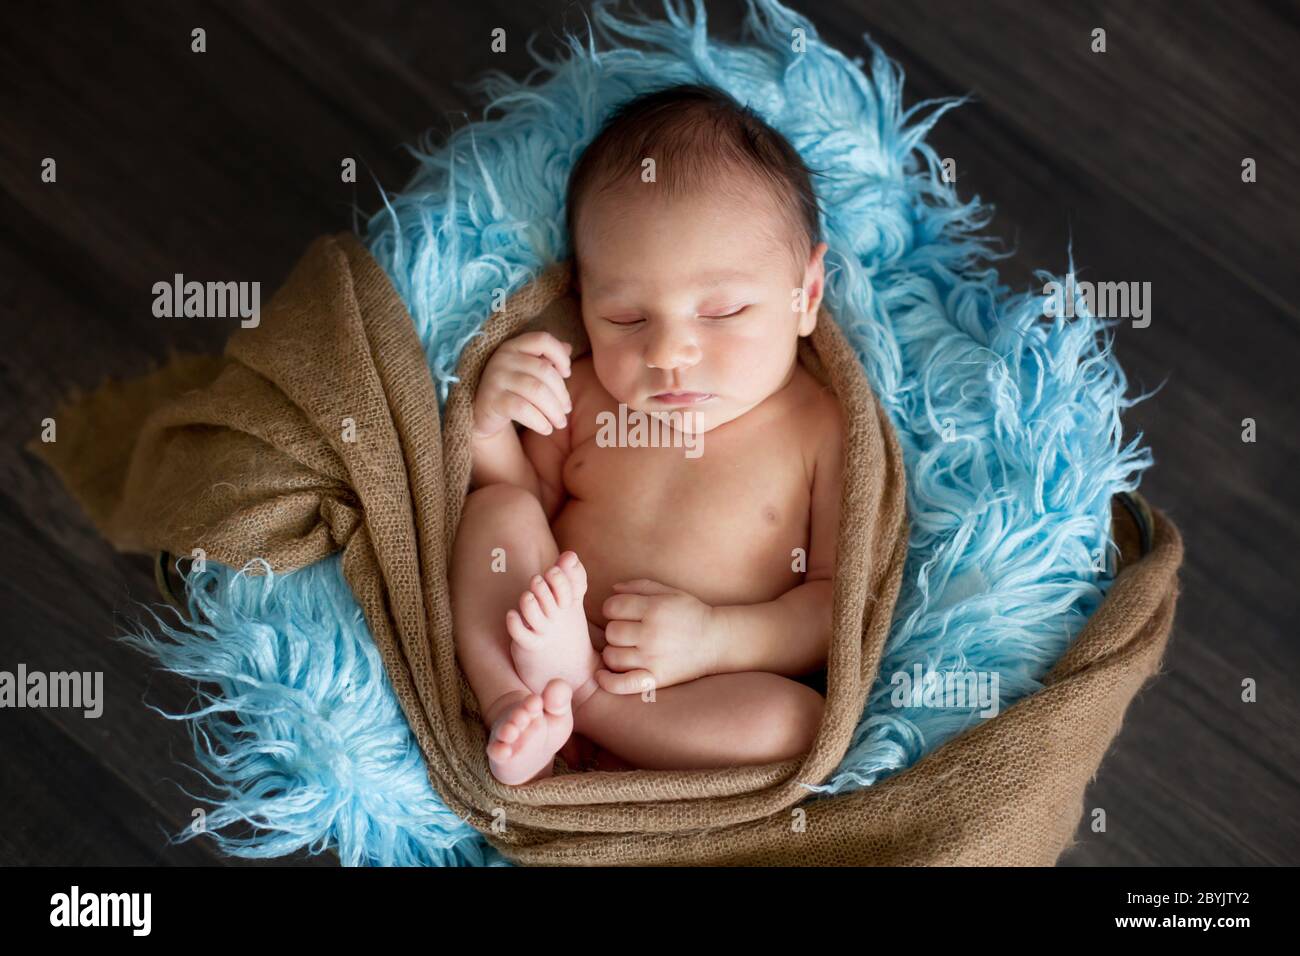 Cute little newborn baby boy, sleeping in basket with colorful ...